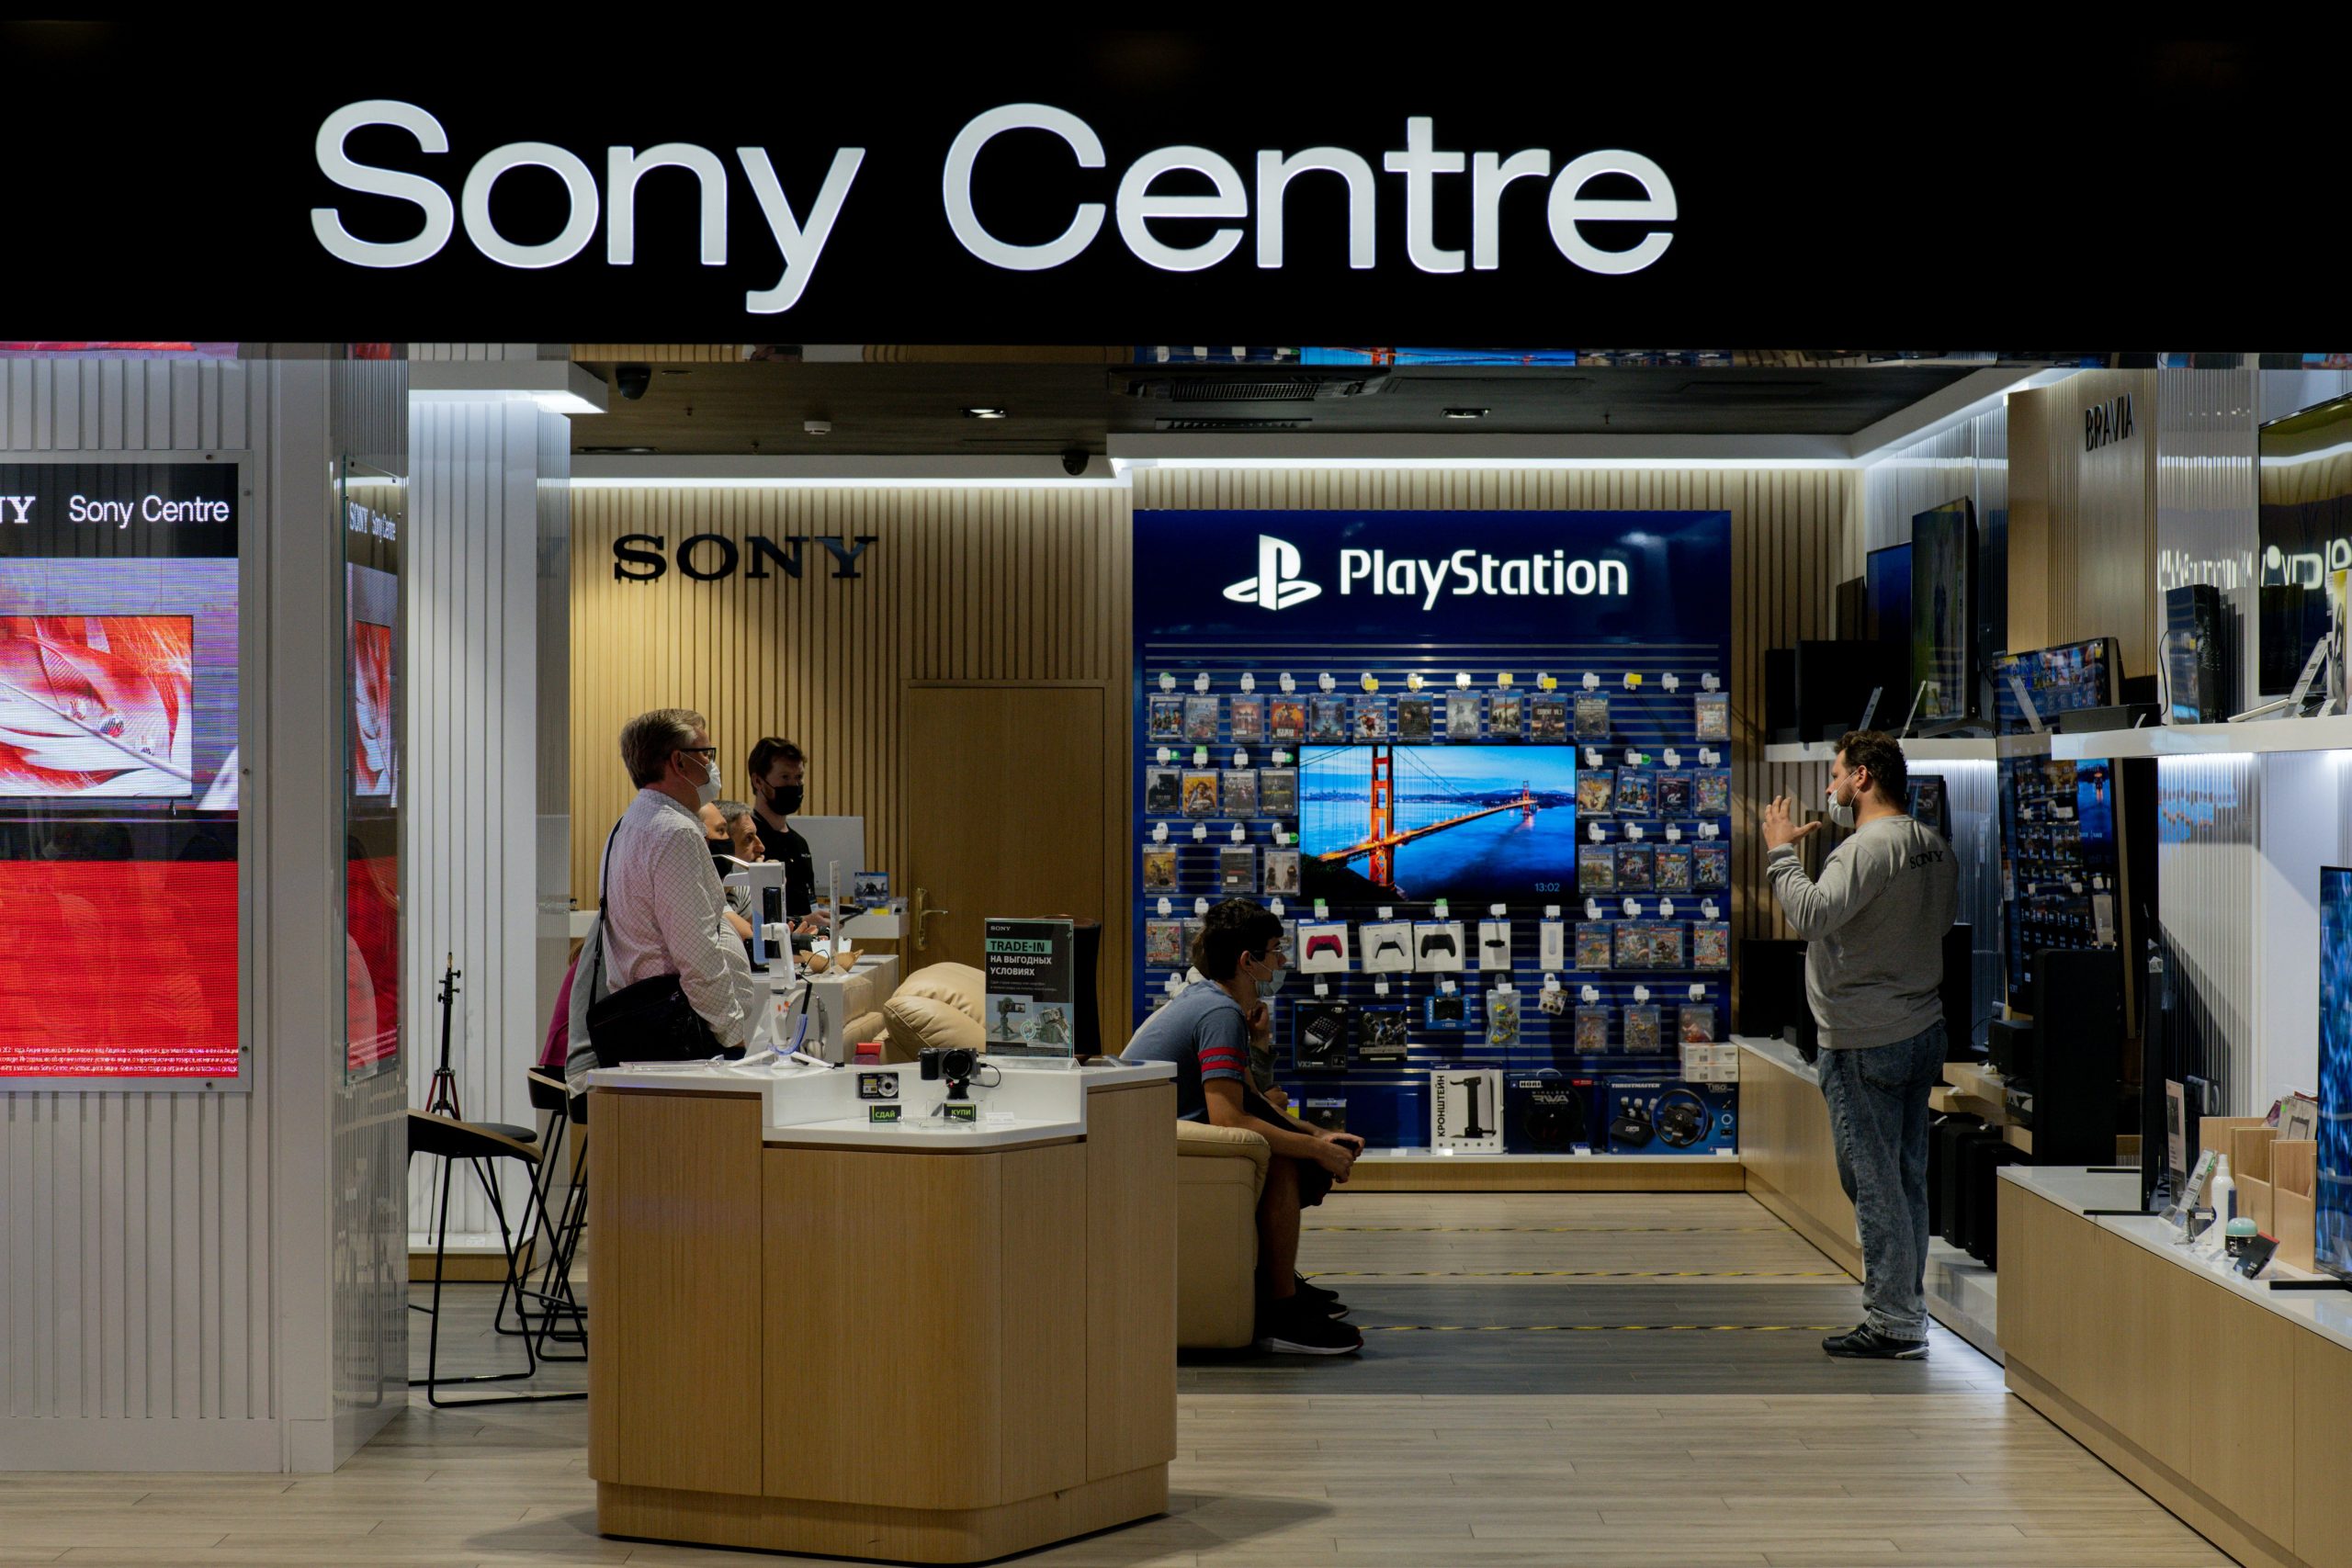 Sonys latest foray into gaming, Inzone